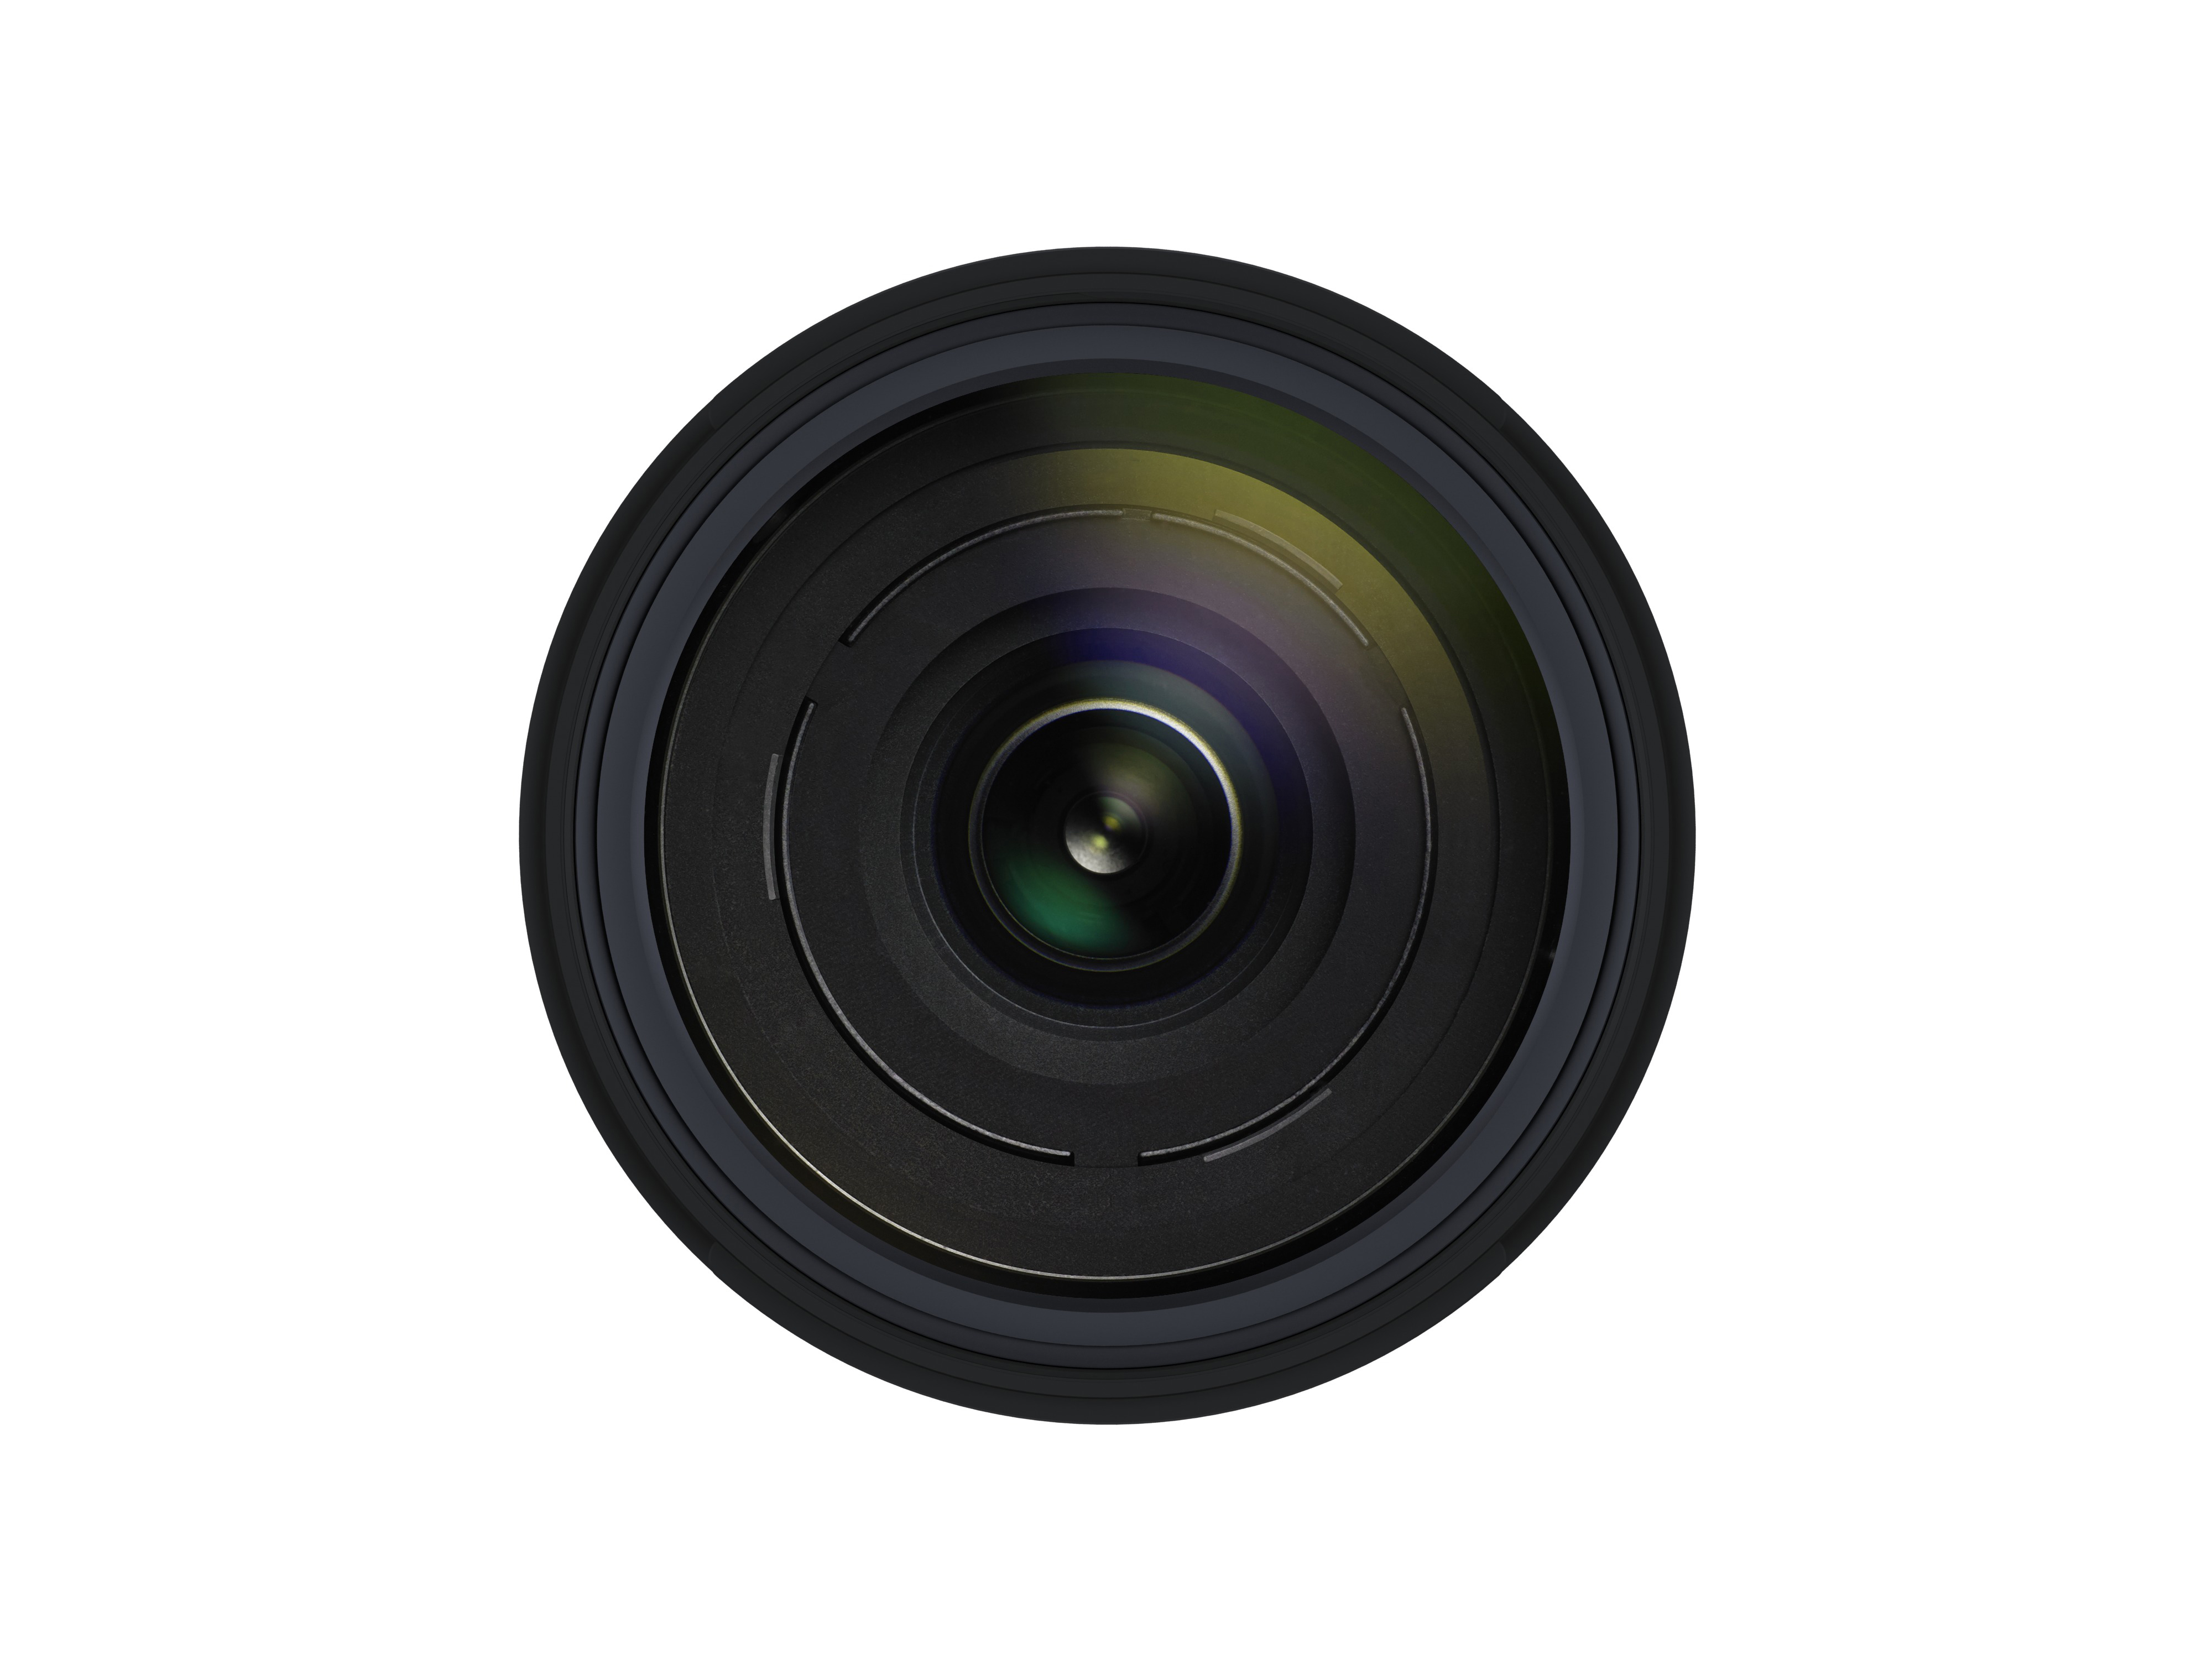 TAMRON DI HLD 18 Schwarz) - für f/3.5-6.3 Nikon Di mm VC 400 (Objektiv HLD, mm F-Mount, II